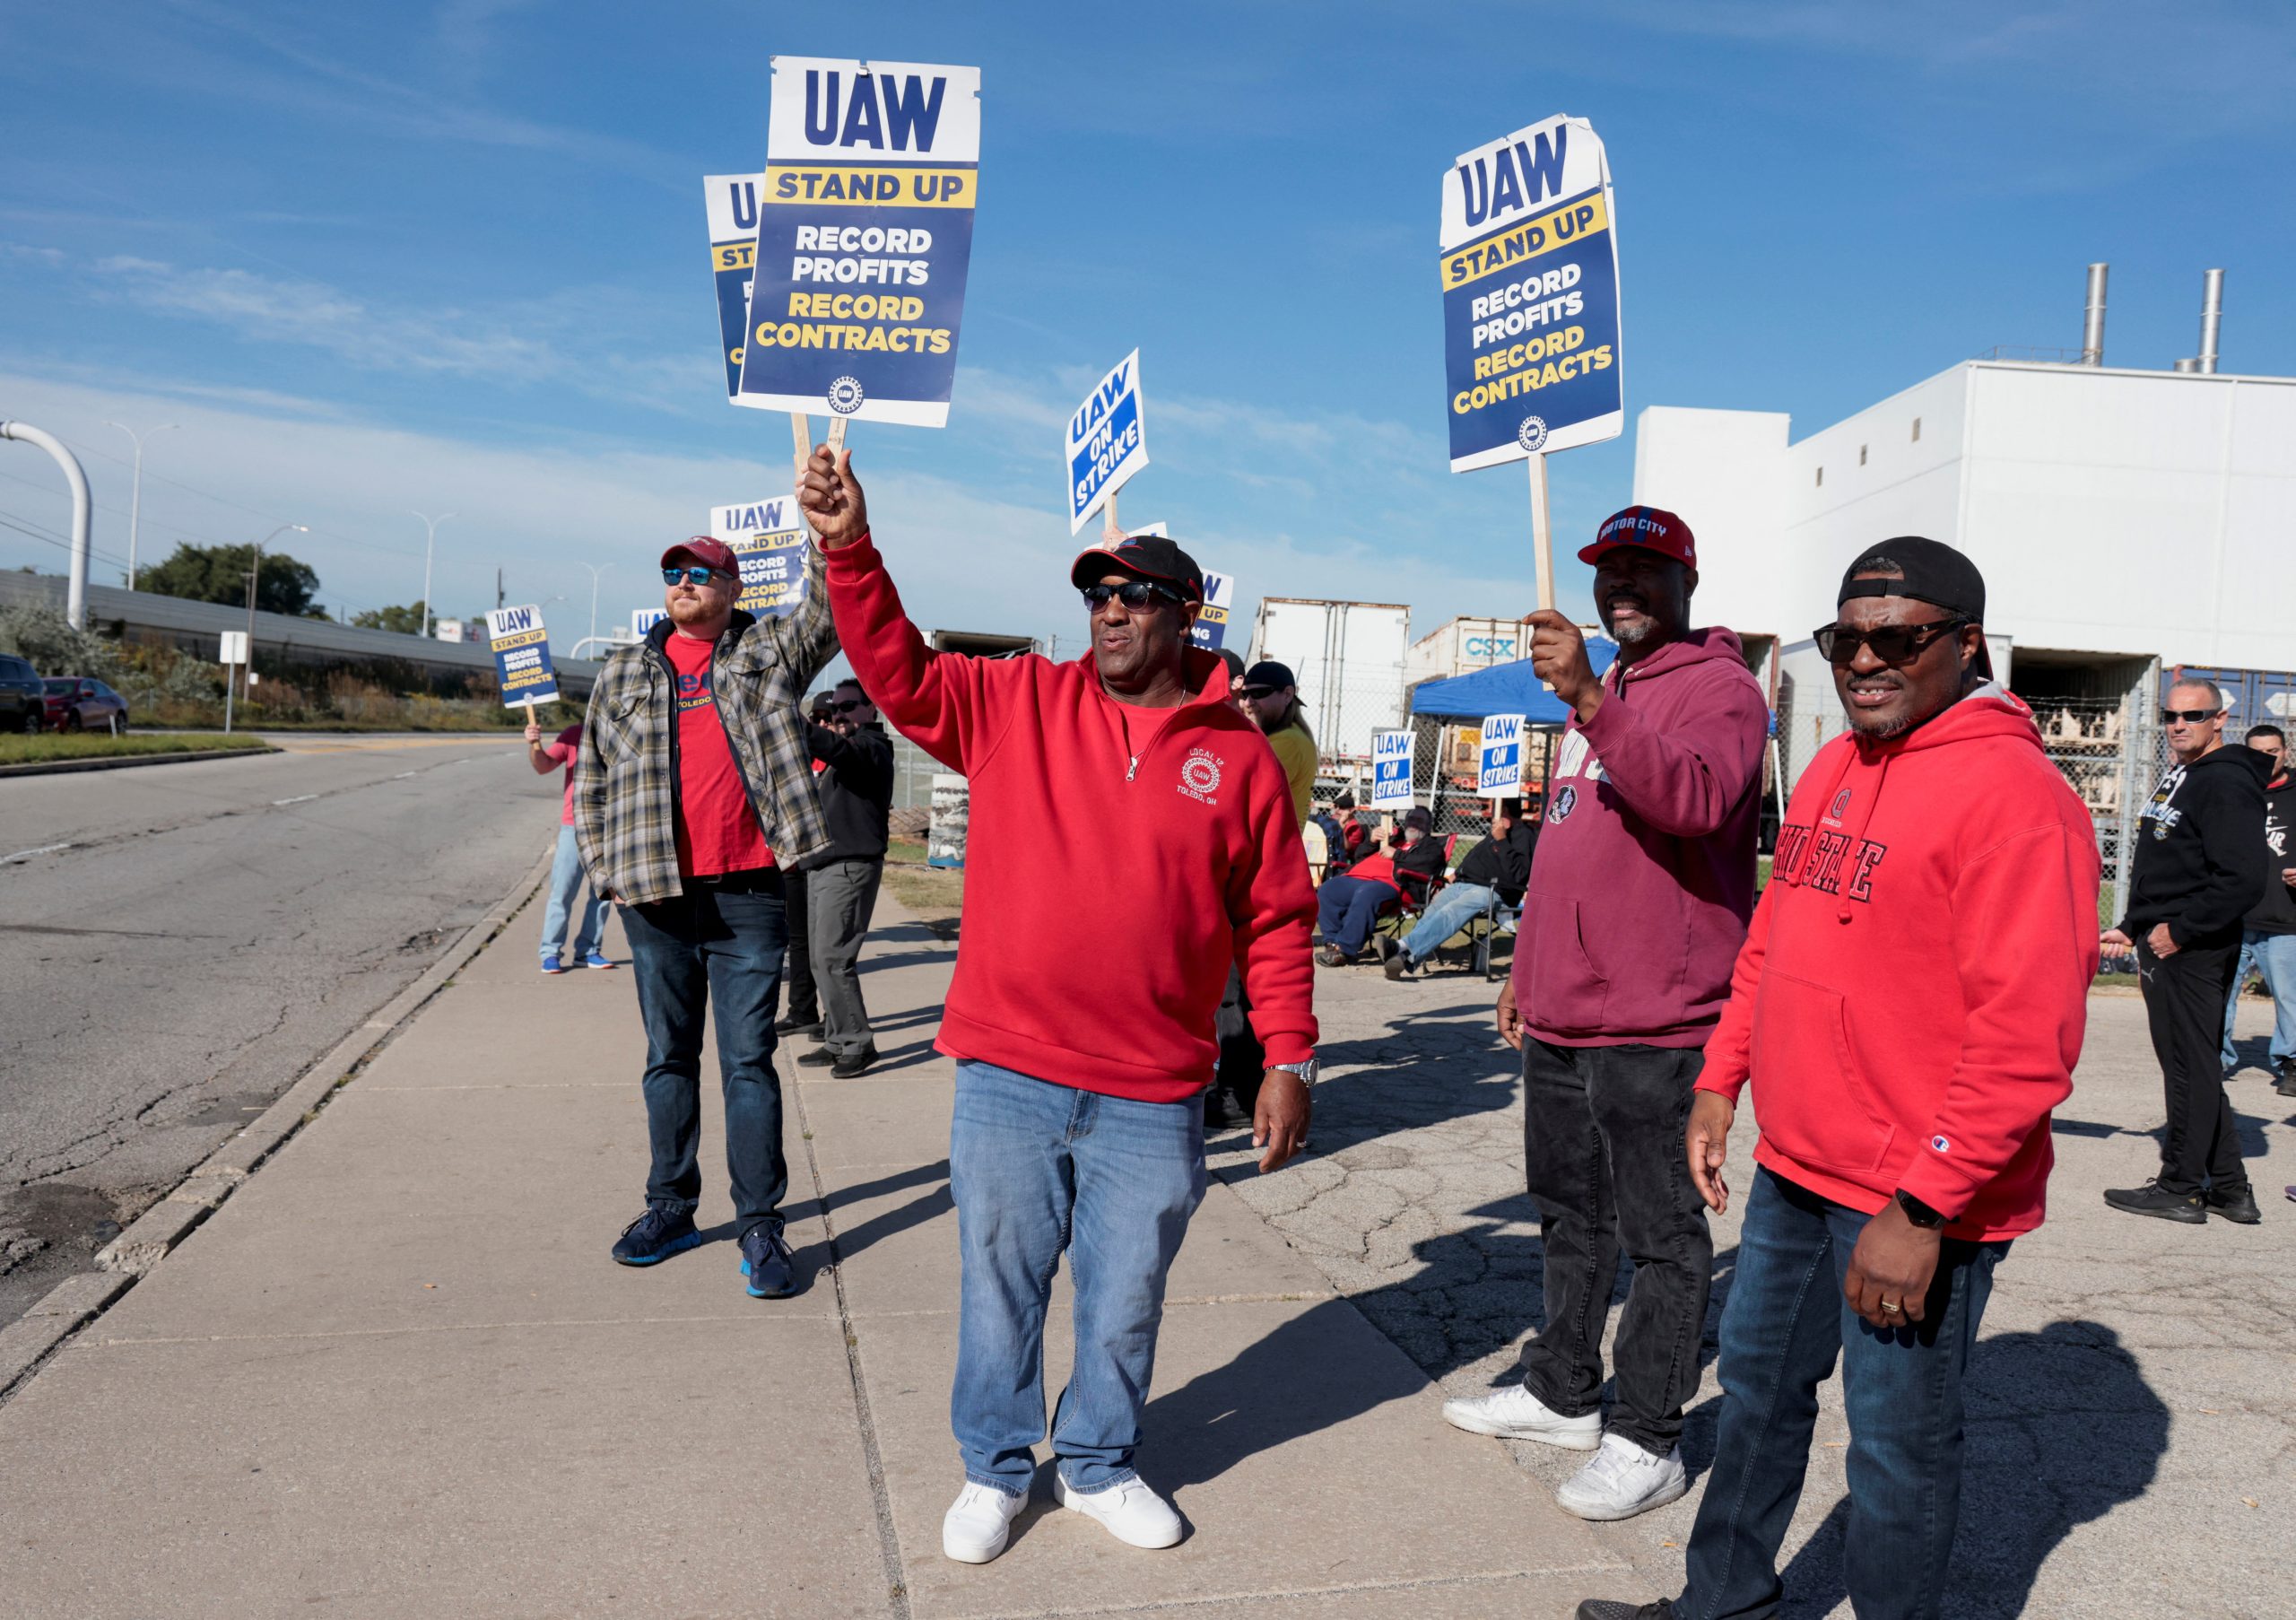 UAW Loses Unionization Battle at Alabama Mercedes Facility